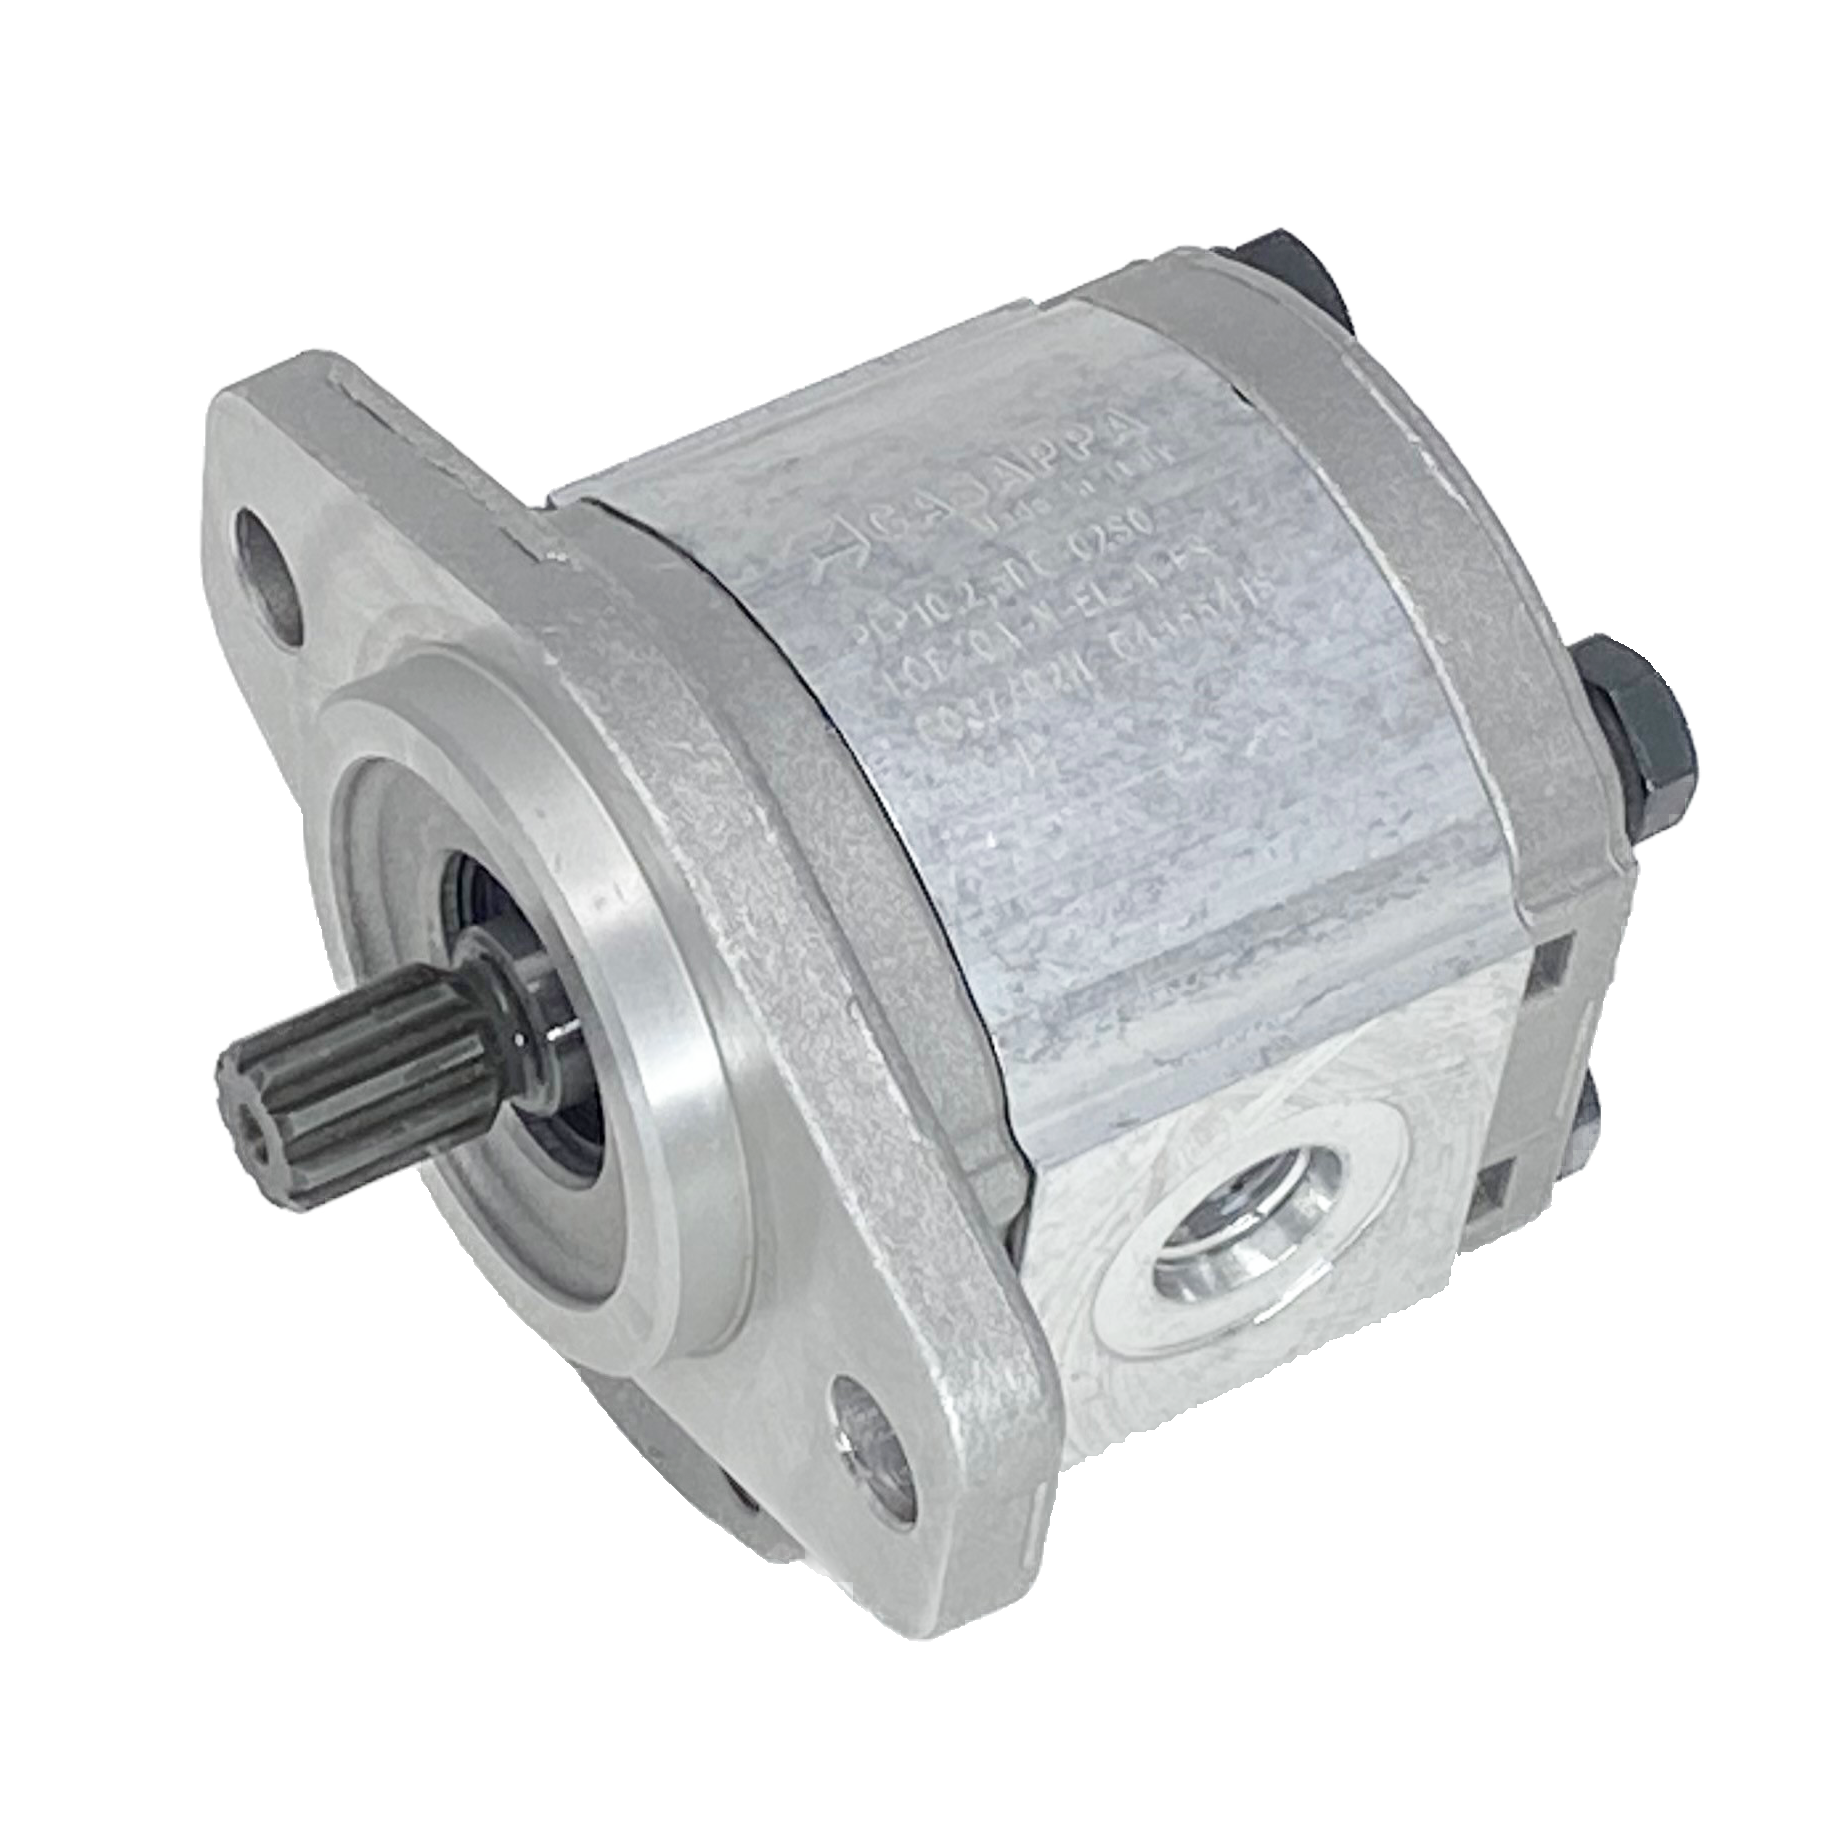 PLP10.3,15S0-02S0-LOB/OA-N-EL : Casappa Polaris Gear Pump, 3.34cc, 3770psi Rated, 4000RPM, CCW, 9T 20/40dp Shaft, SAE AA 2-Bolt Flange, 0.5 (1/2") #8 SAE Inlet, 0.375 (3/8") #6 SAE Outlet, Aluminum Body & Flange